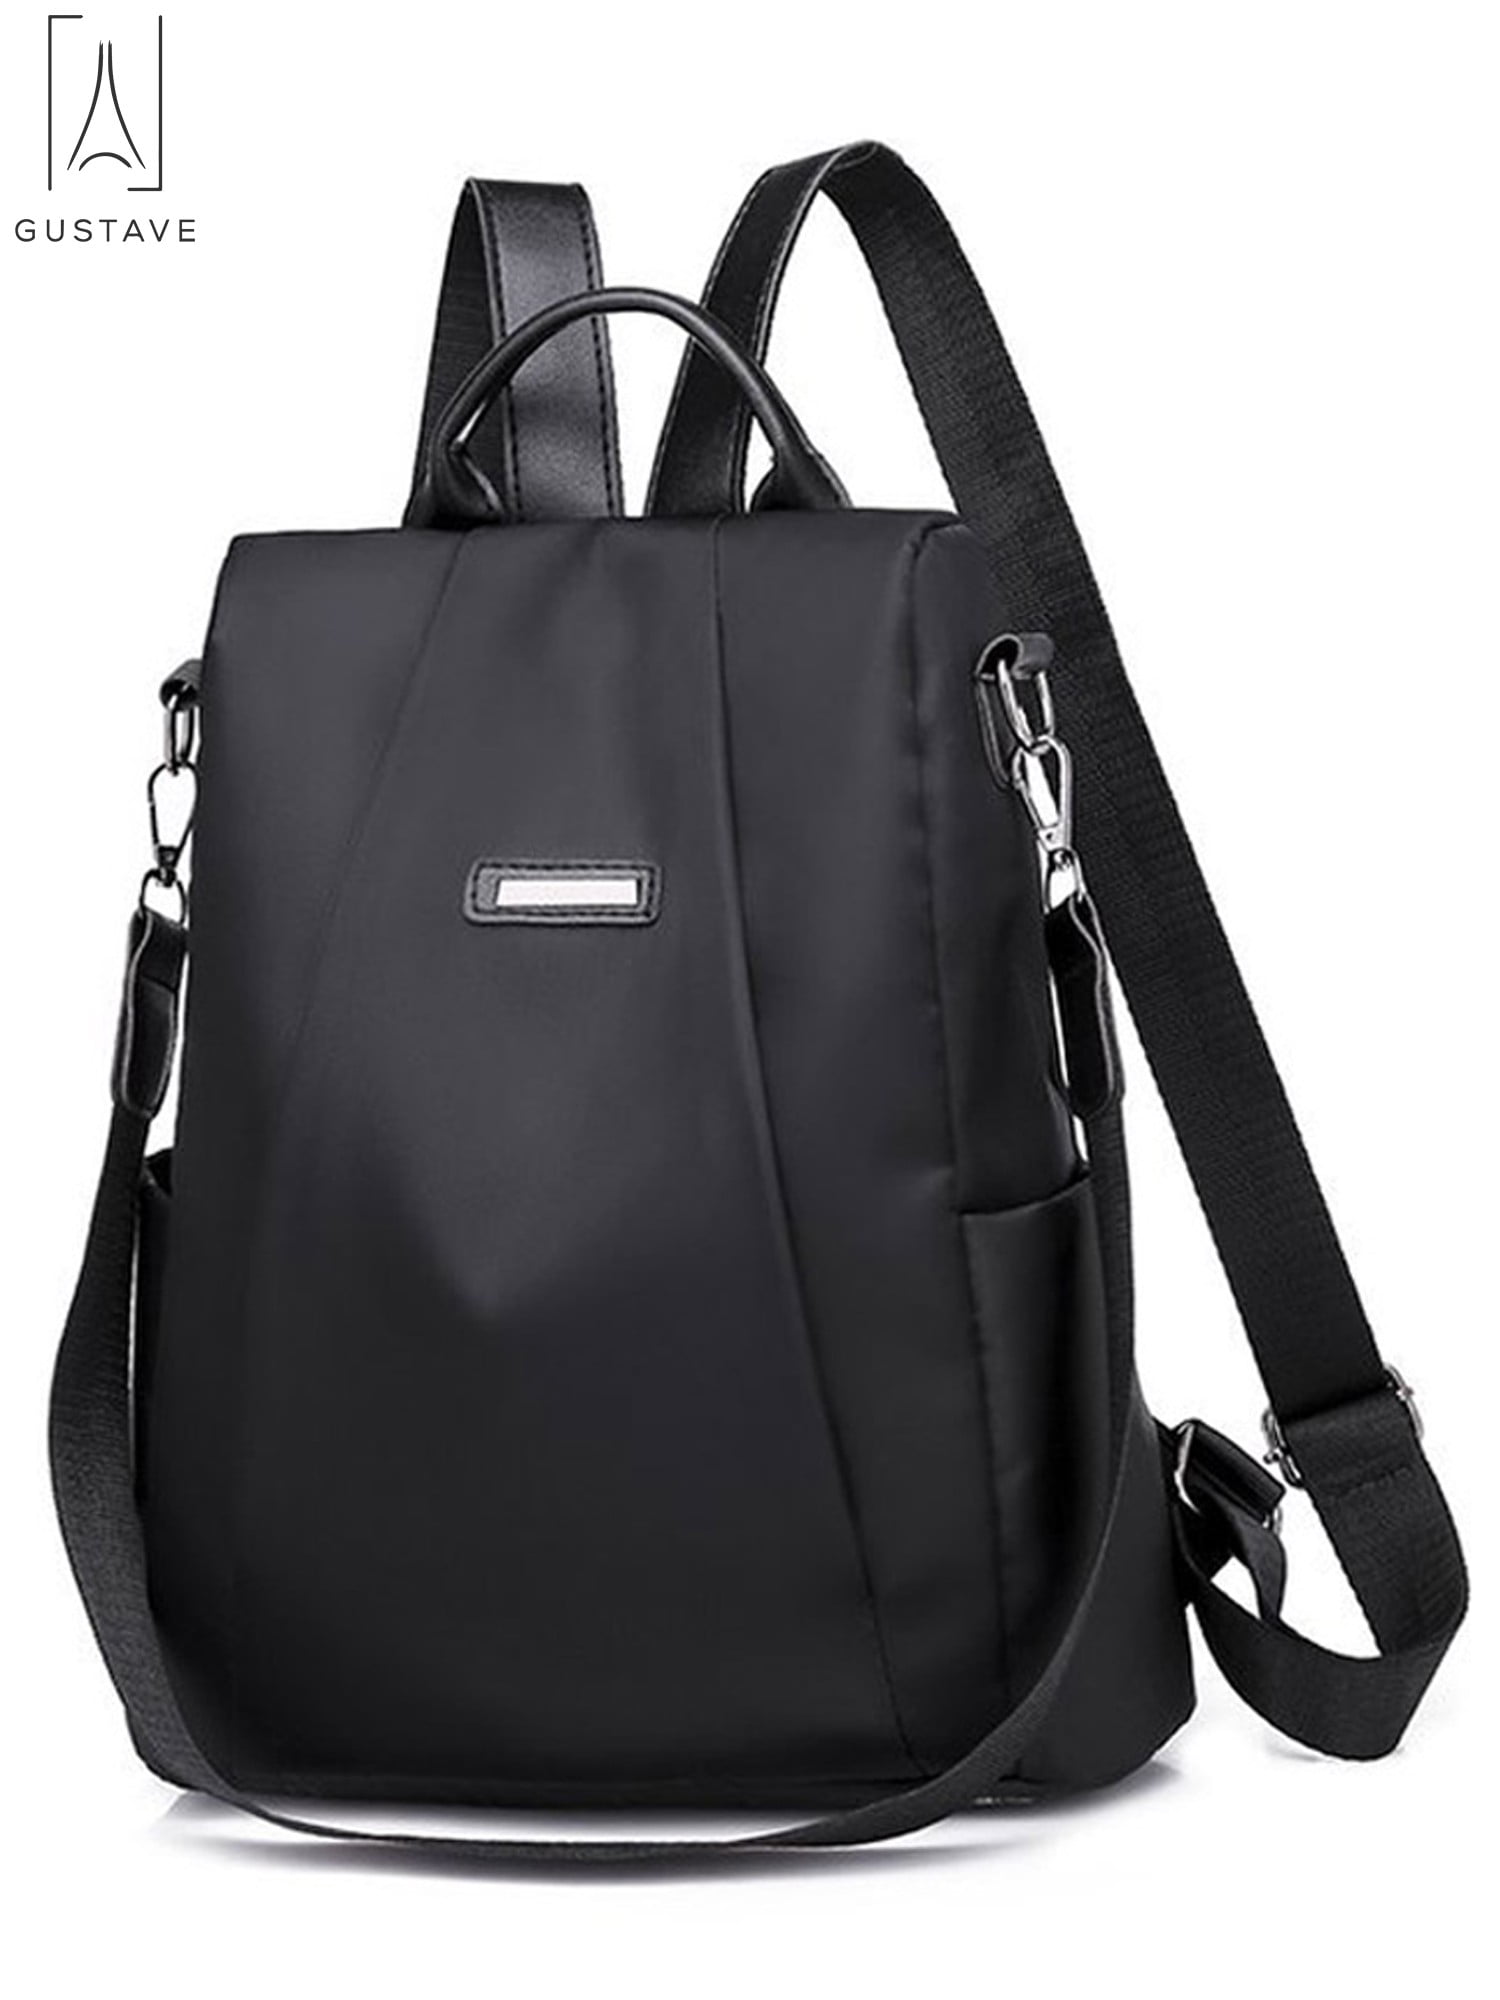 Women Backpack Anti-Theft Rucksack School Travel Shoulder Bag Laptop Satchel